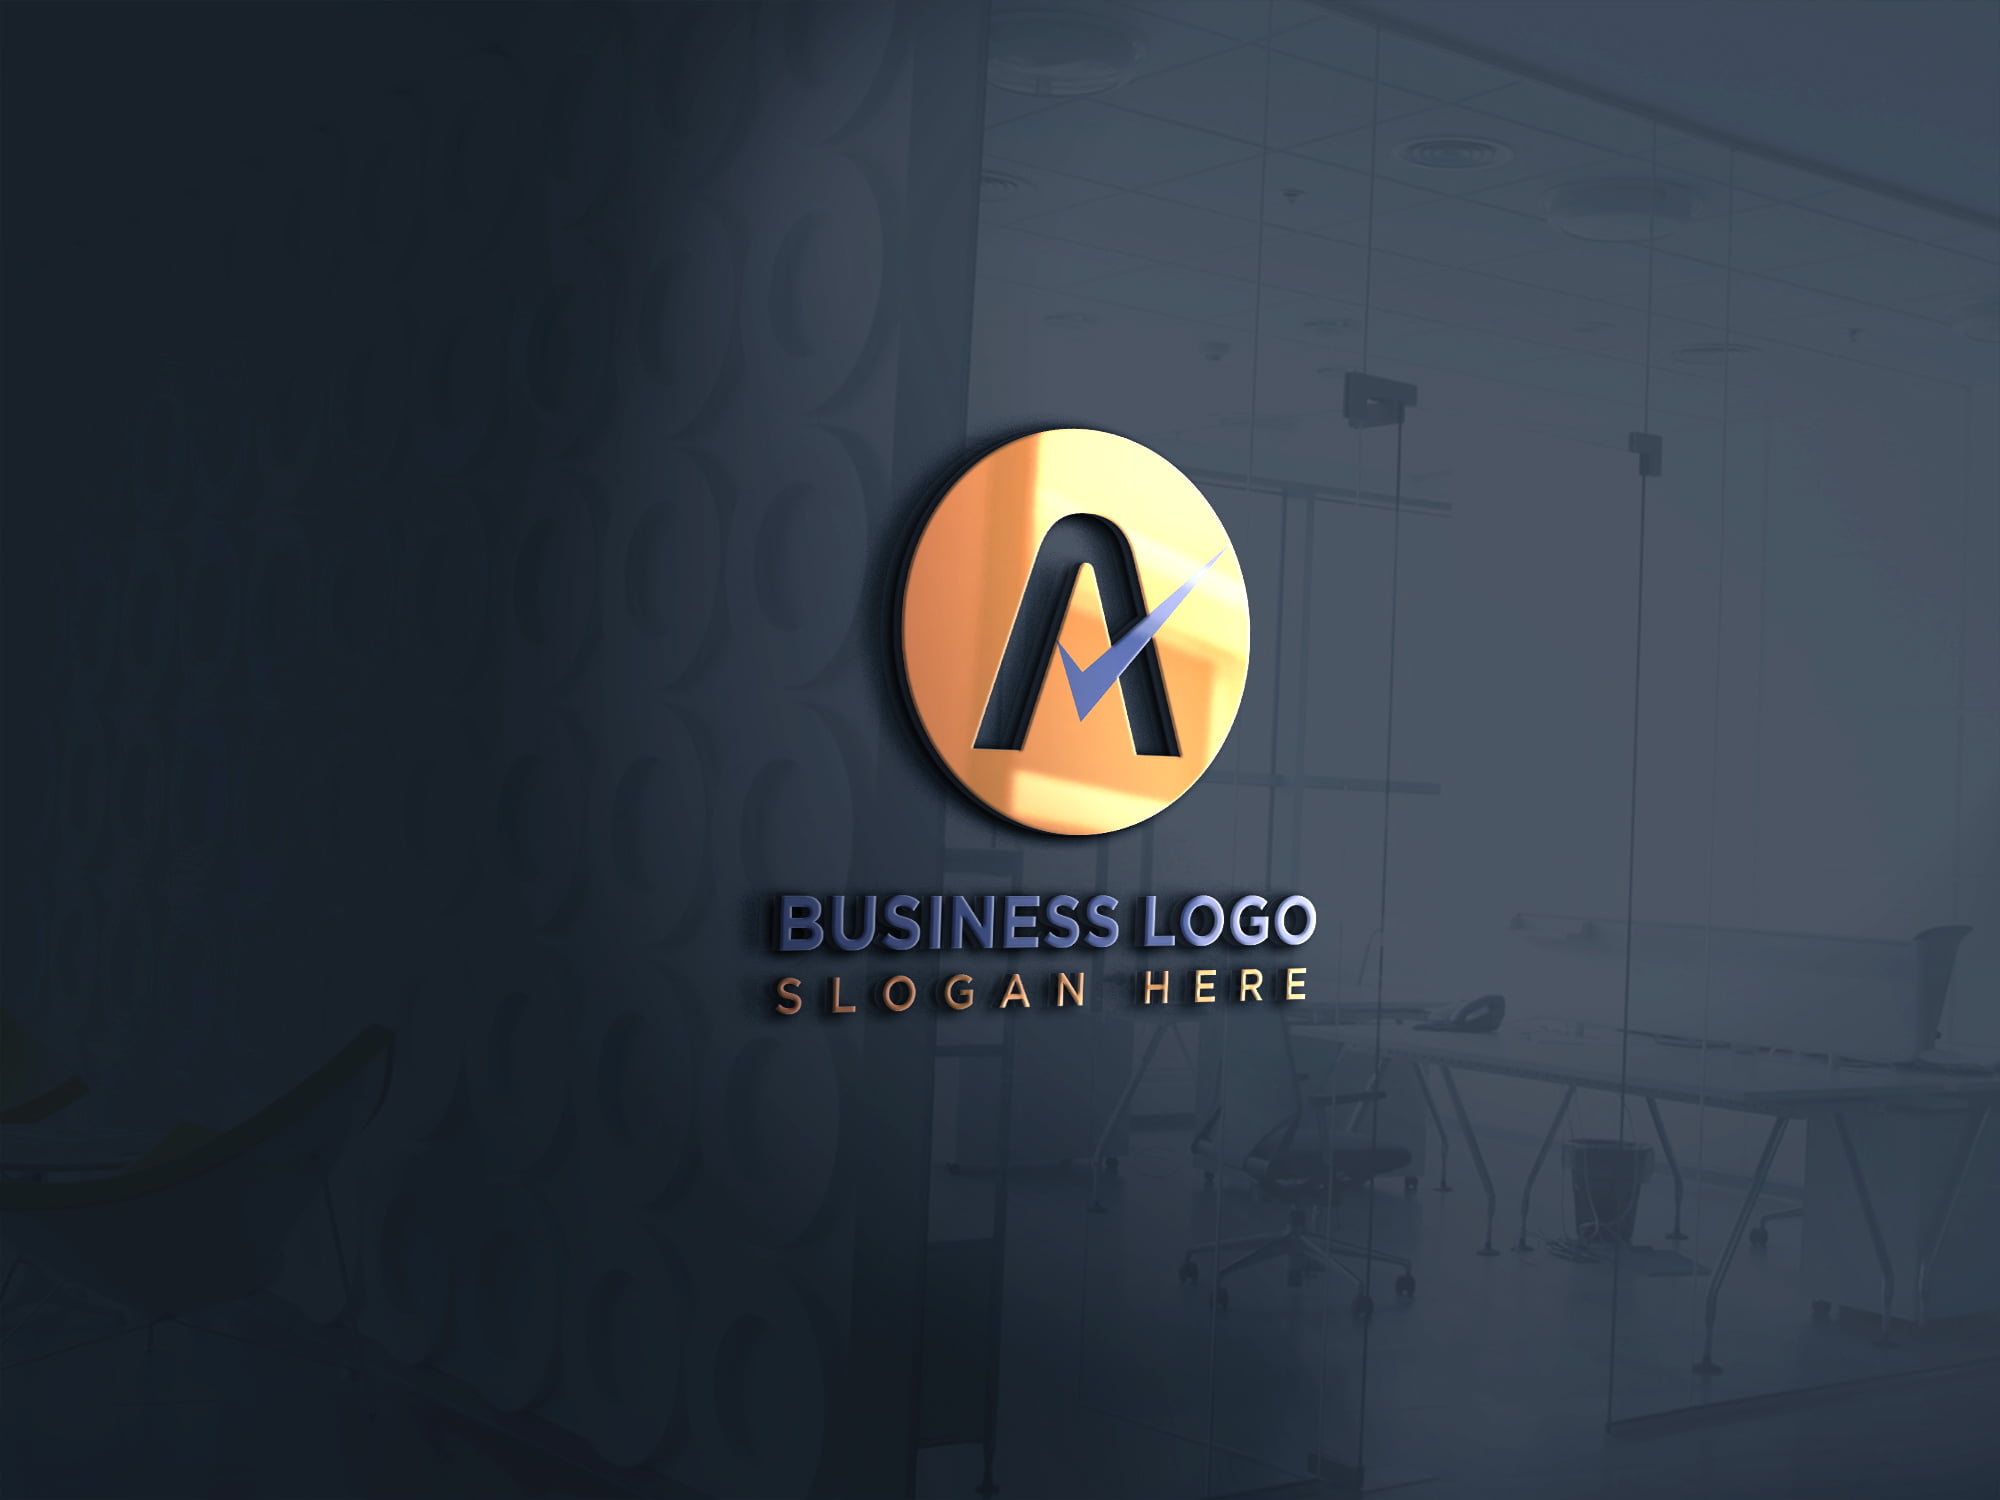 3d business logo presentation